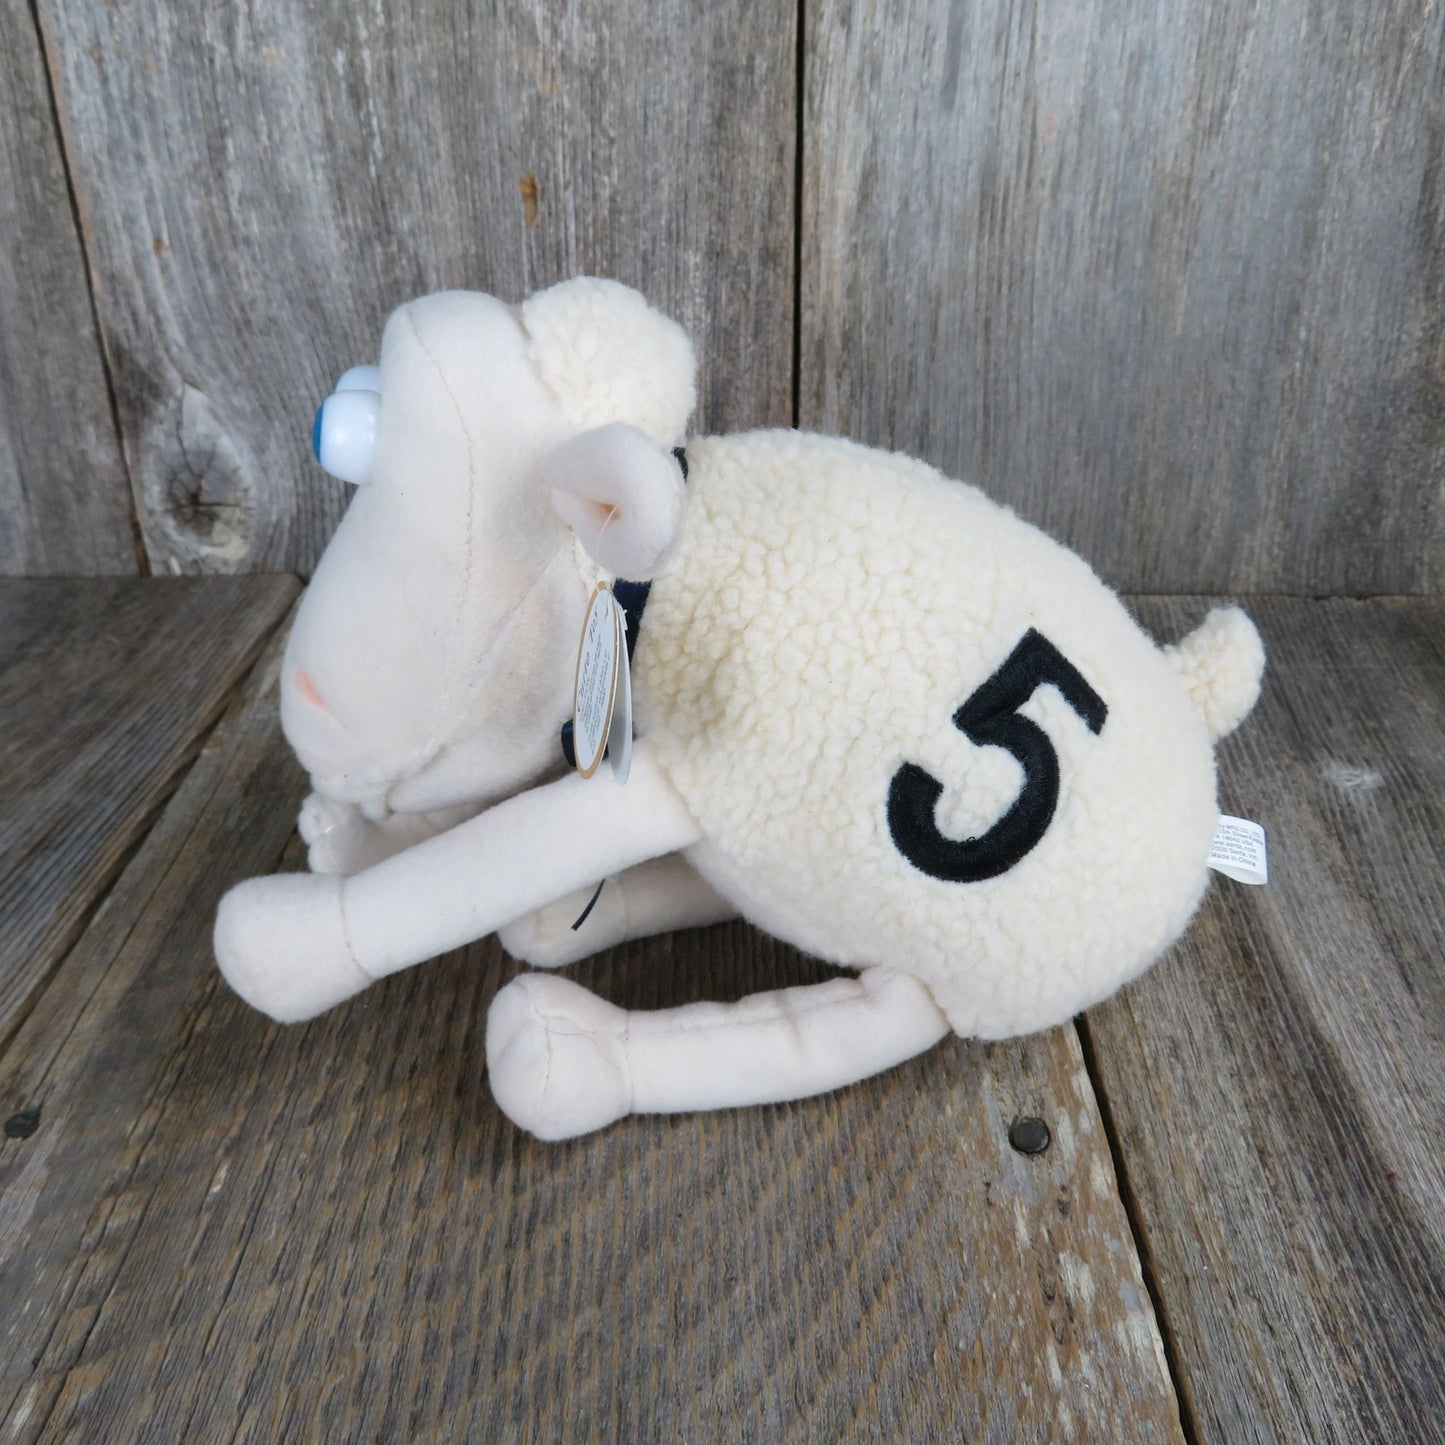 Vintage Serta Counting Sheep #5 Plush Lamb Sherpa White Cream Curto Toys 2000 Mattress